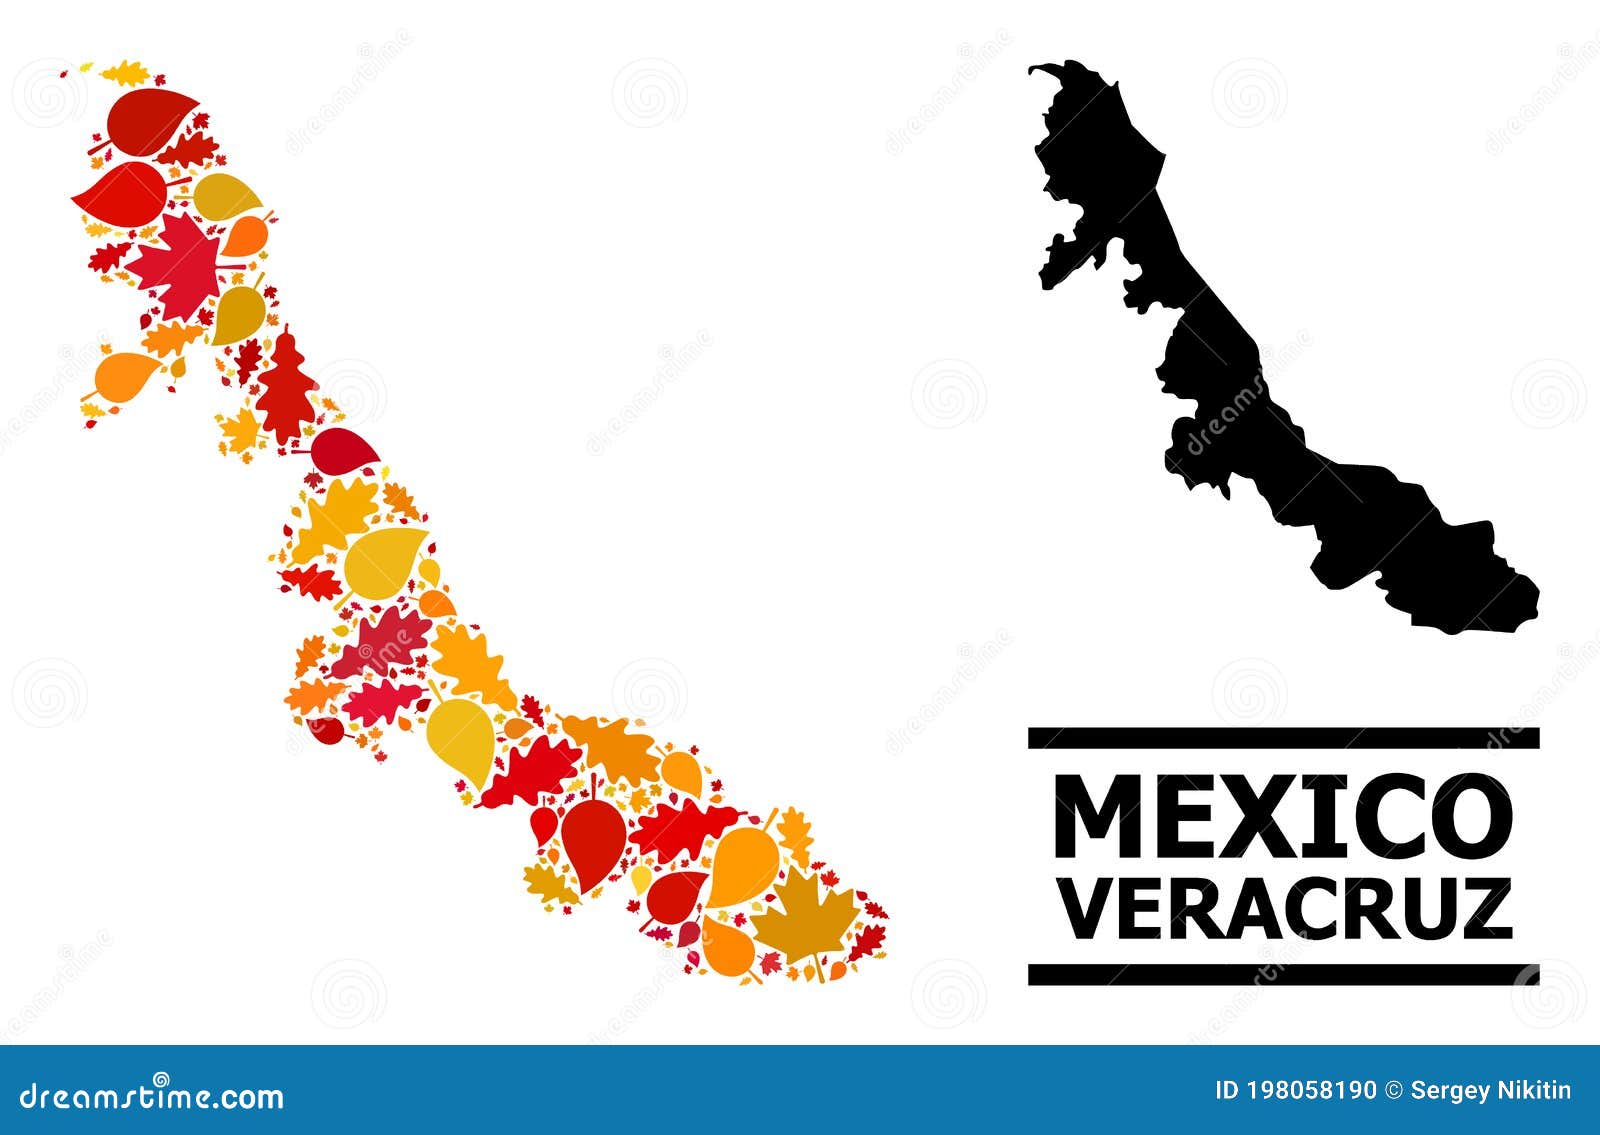 autumn leaves - mosaic map of veracruz state